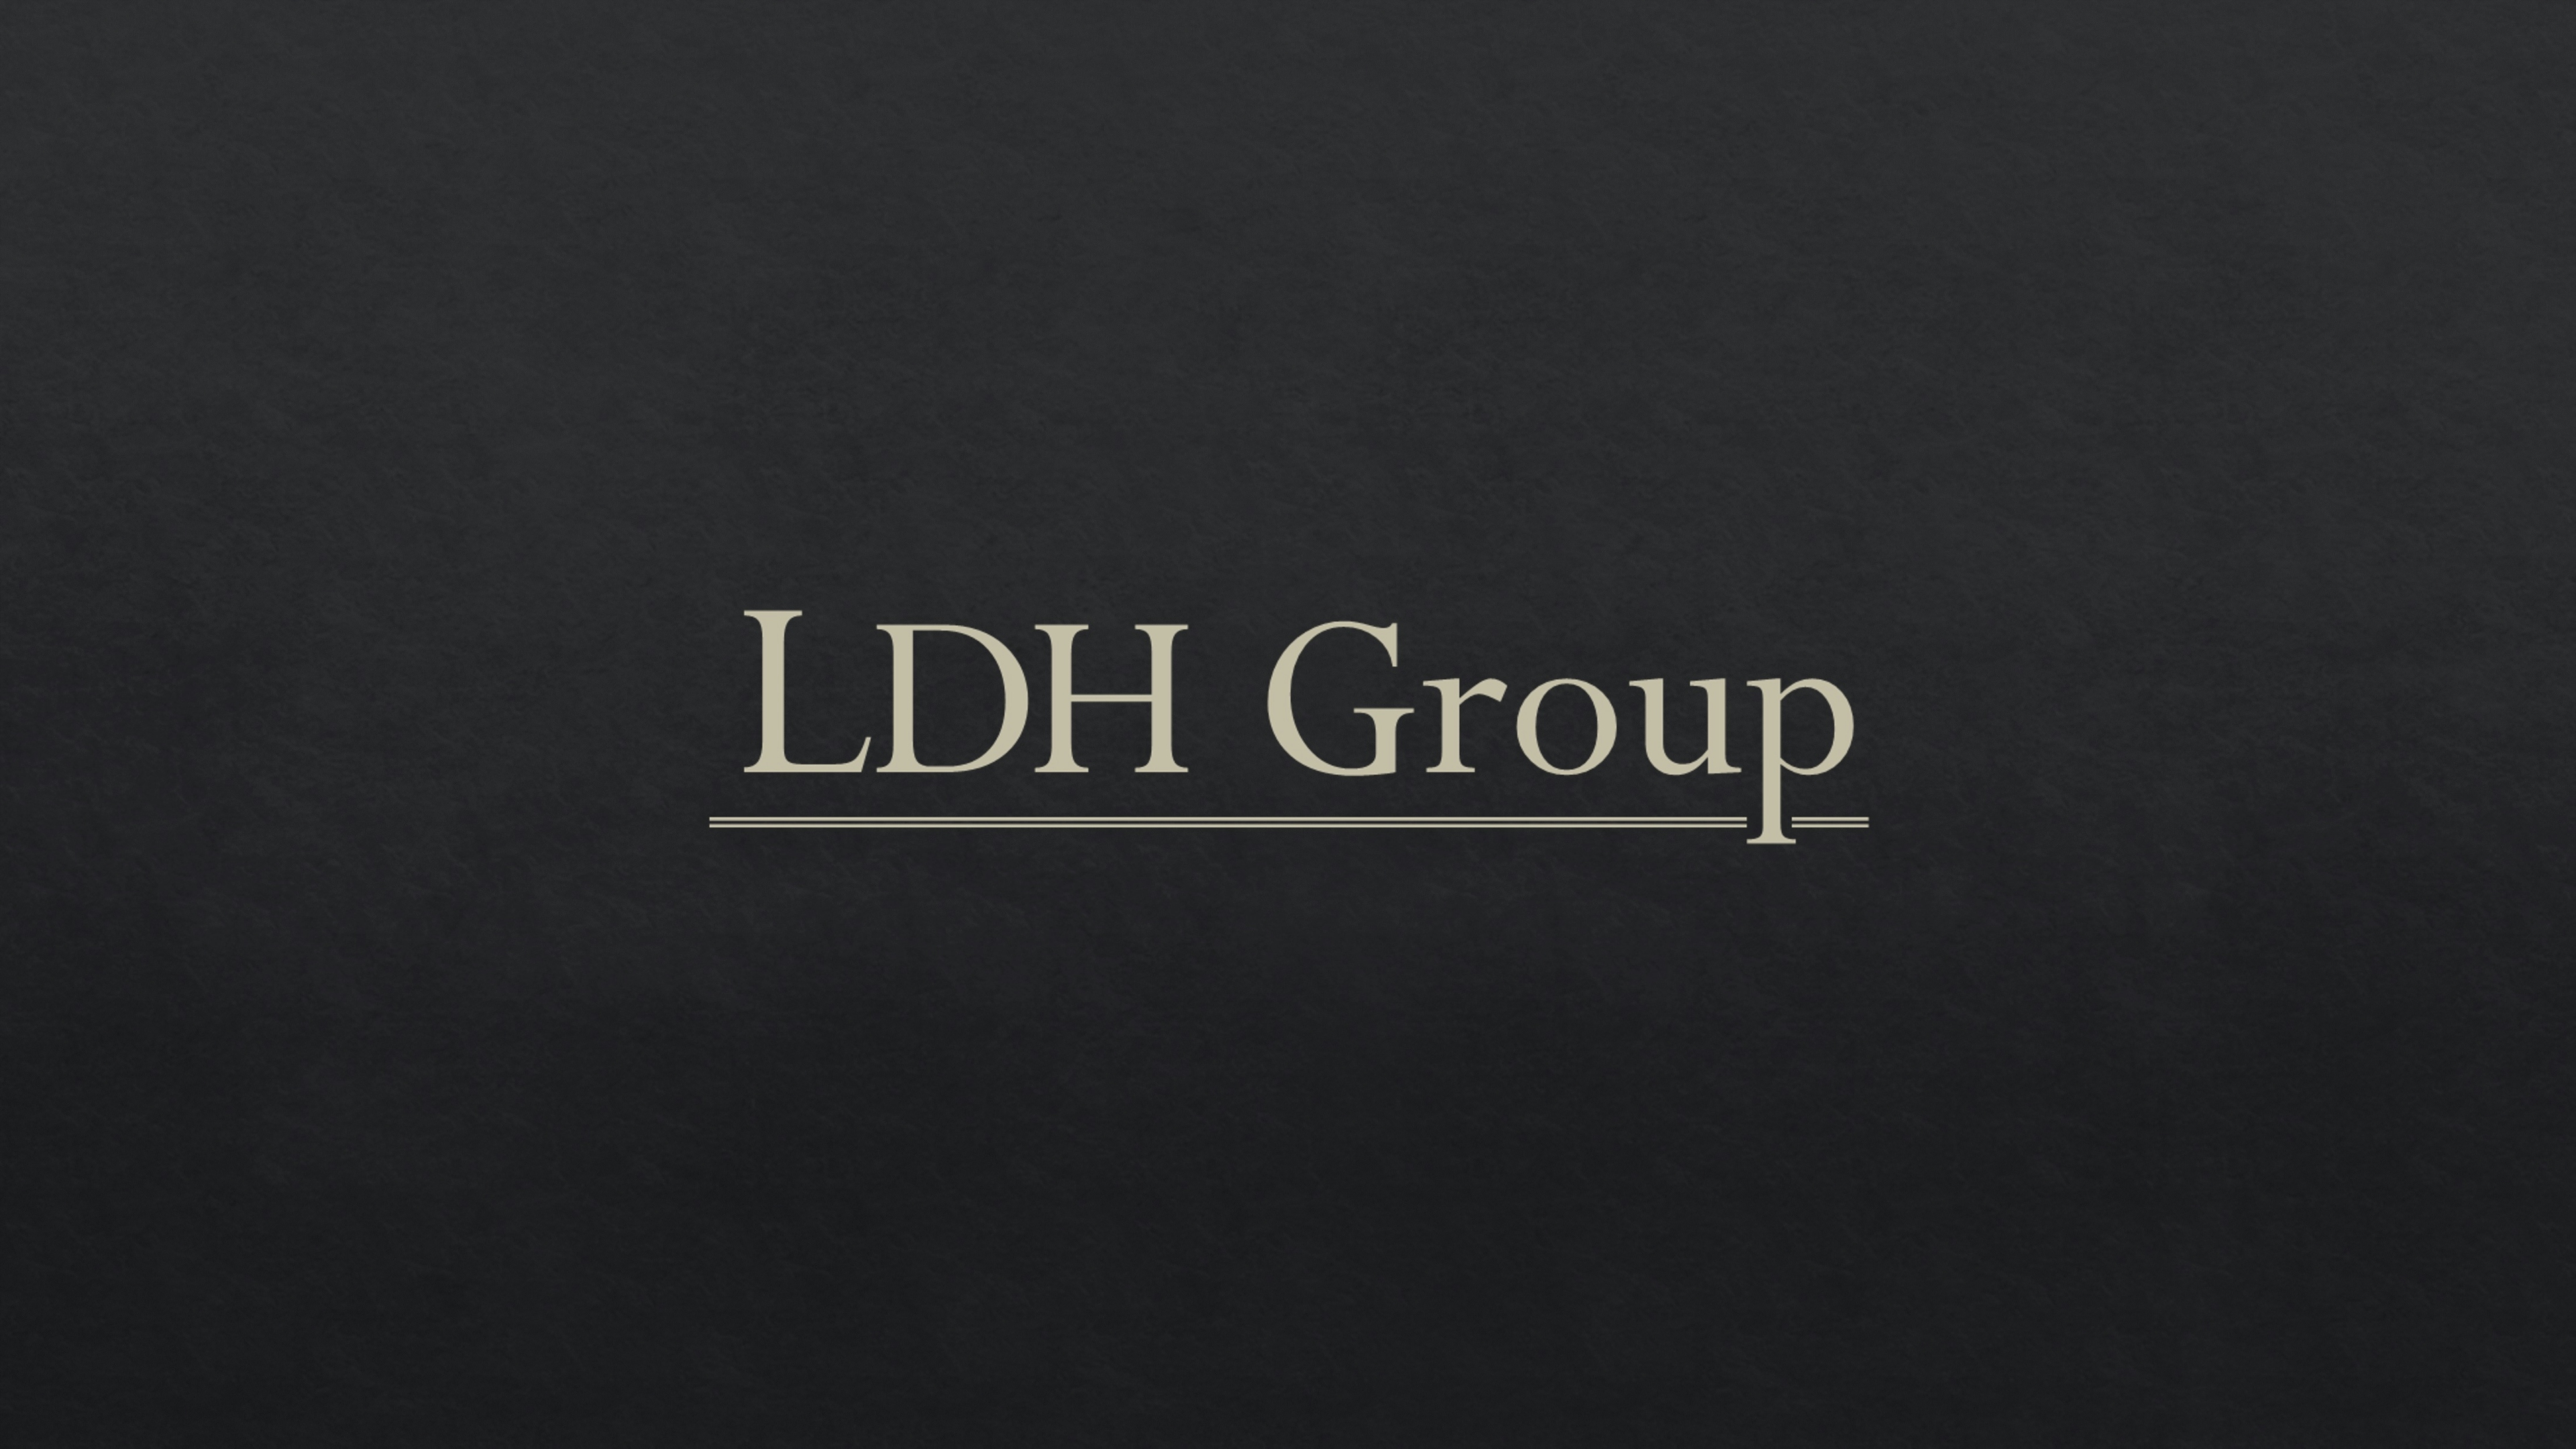 Carousel LDH Group image